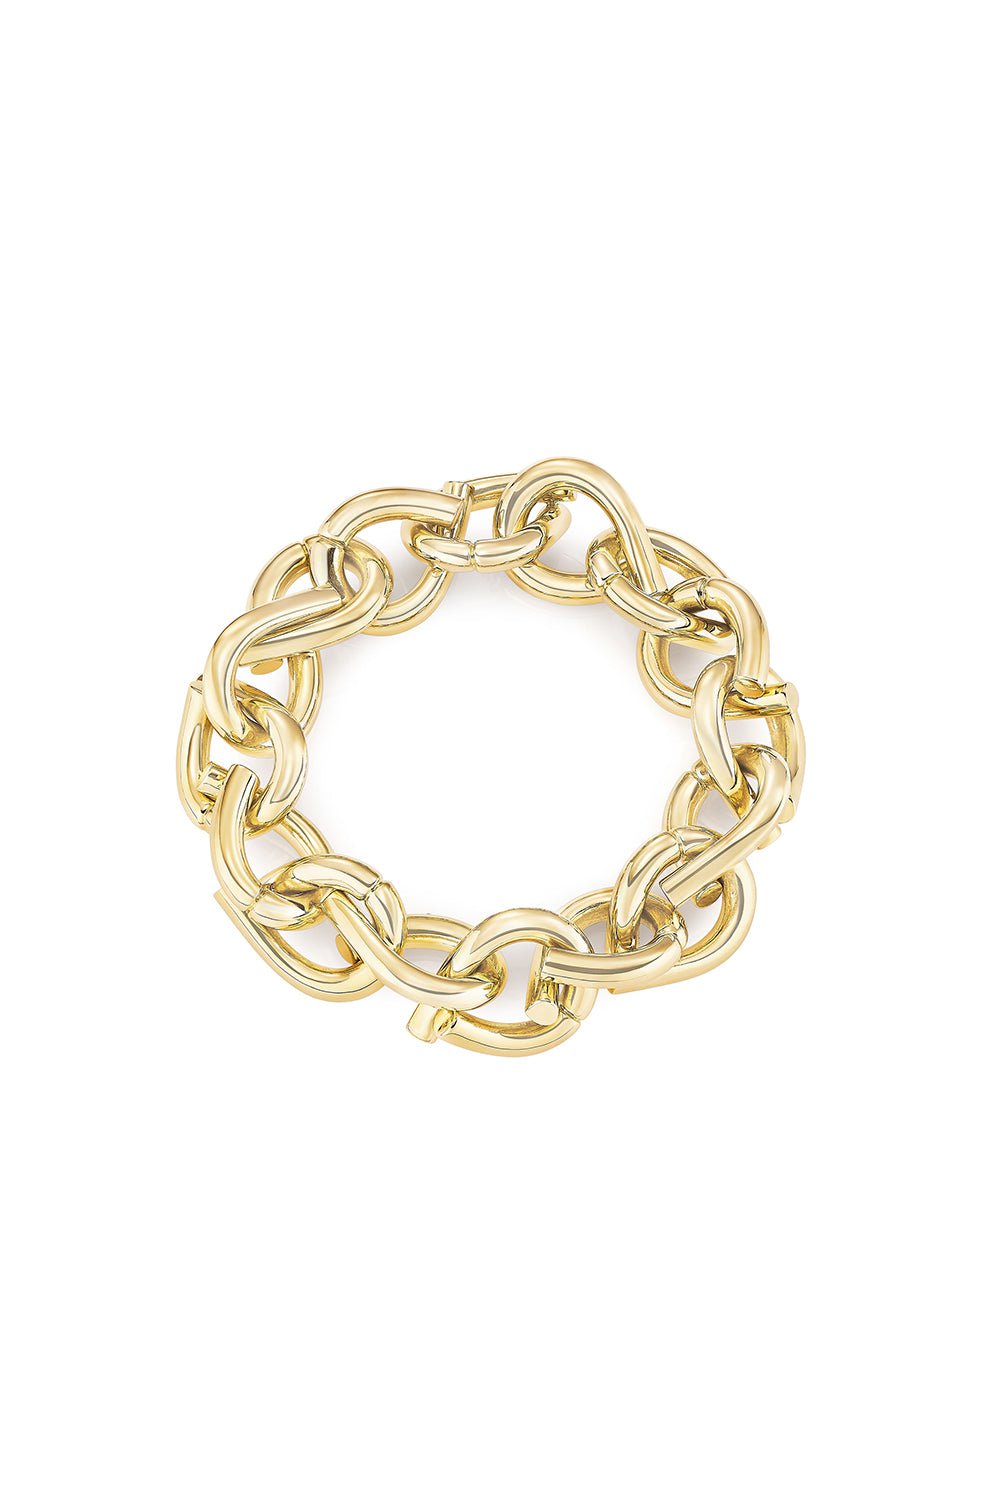 TABAYER-Oera Link Bracelet-YELLOW GOLD